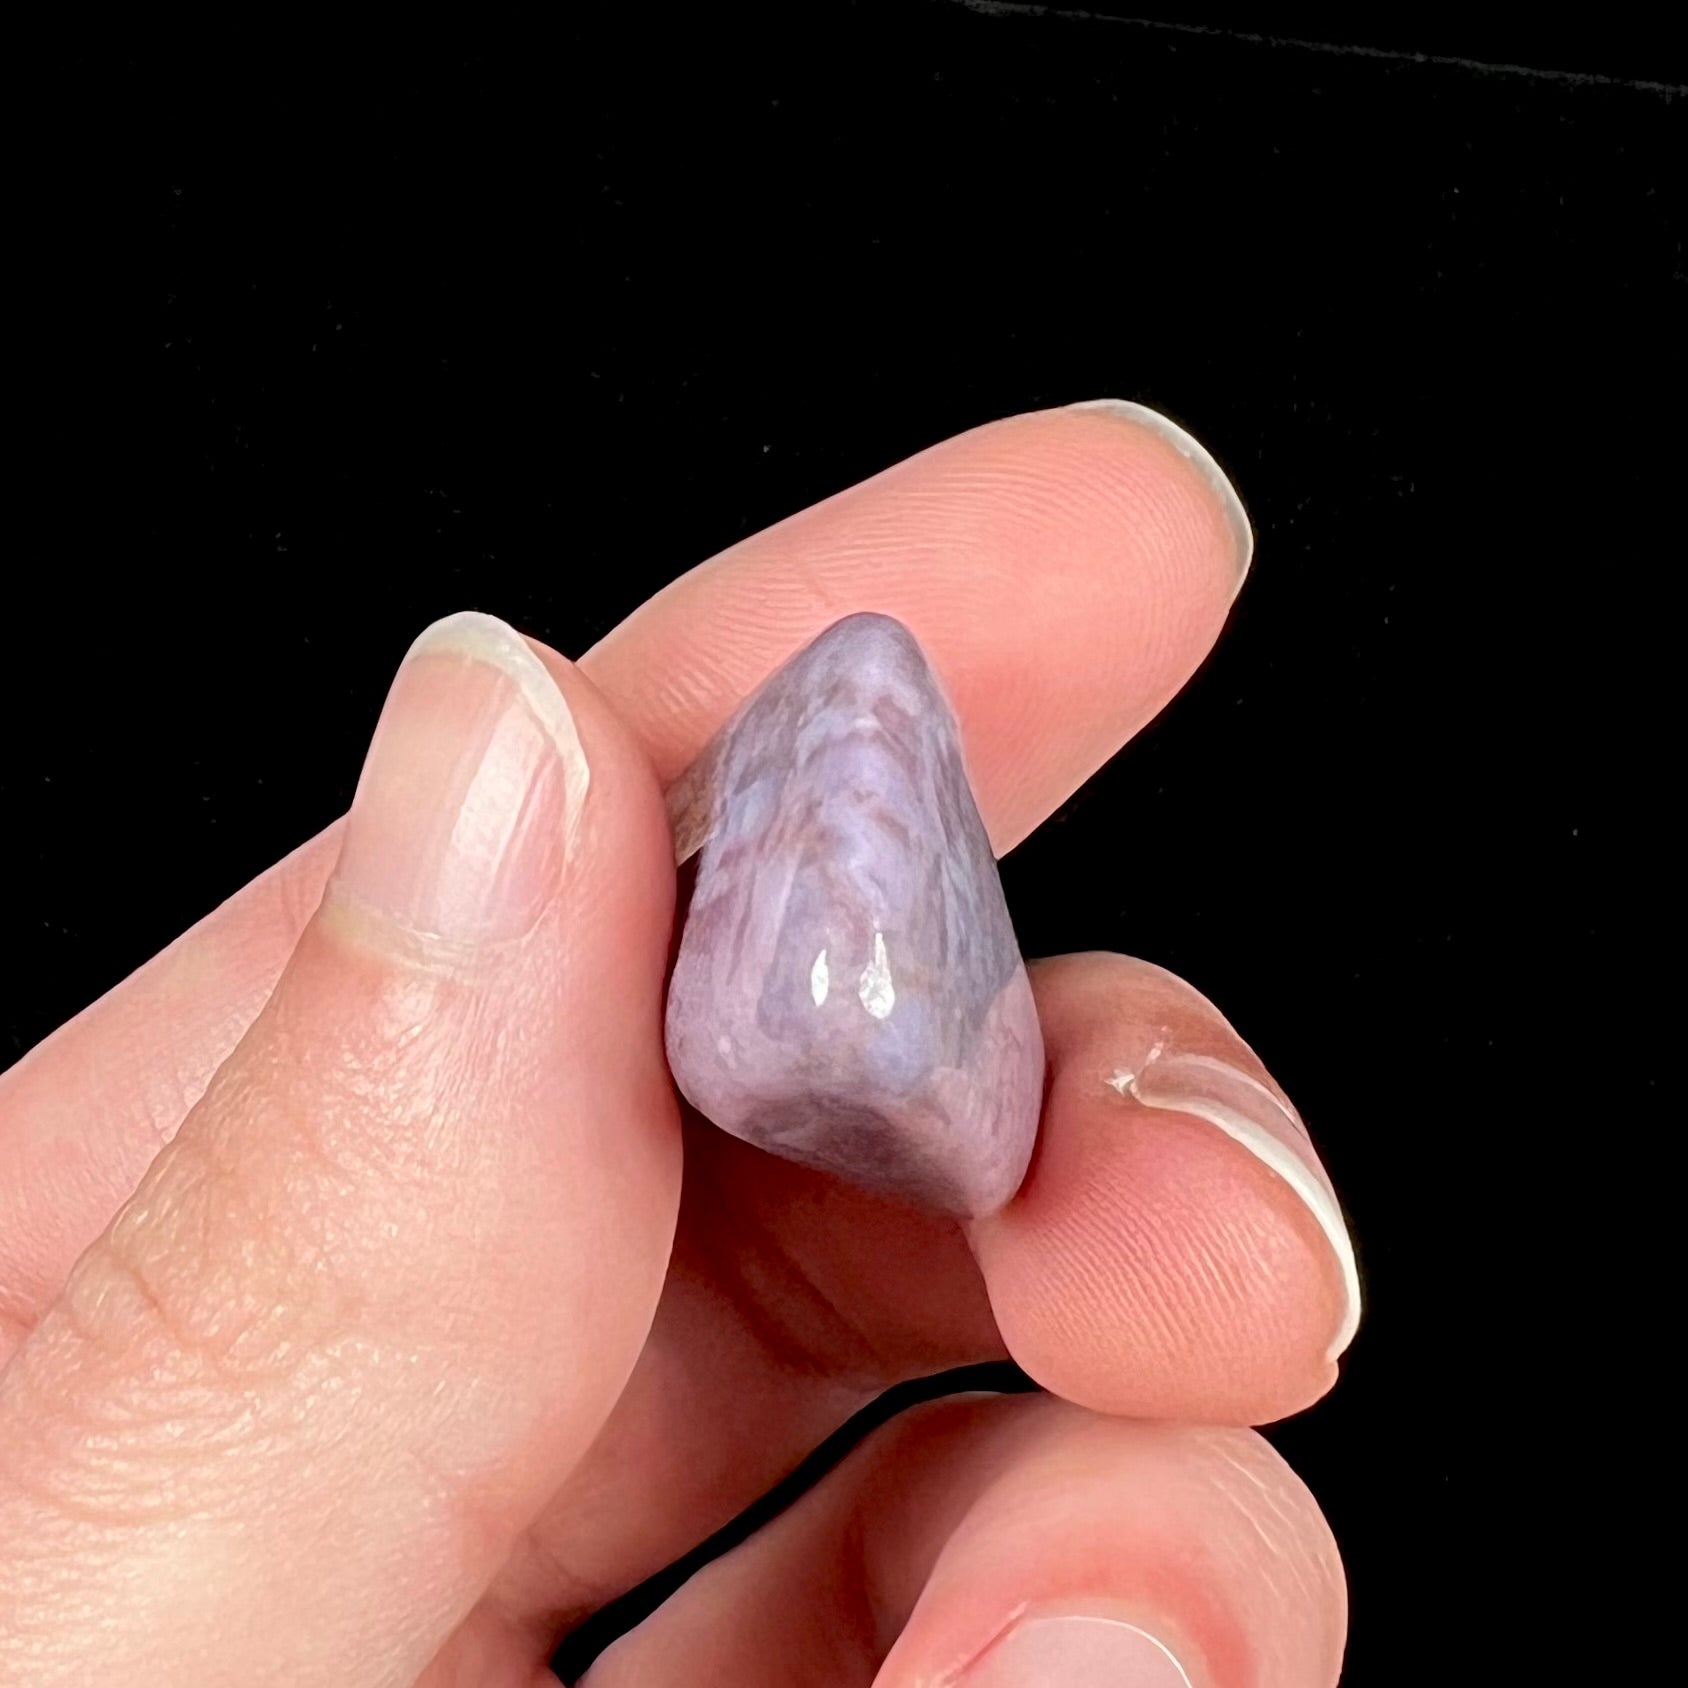 A tumbled purple turkiyenite jade stone from Bursa, Turkey.